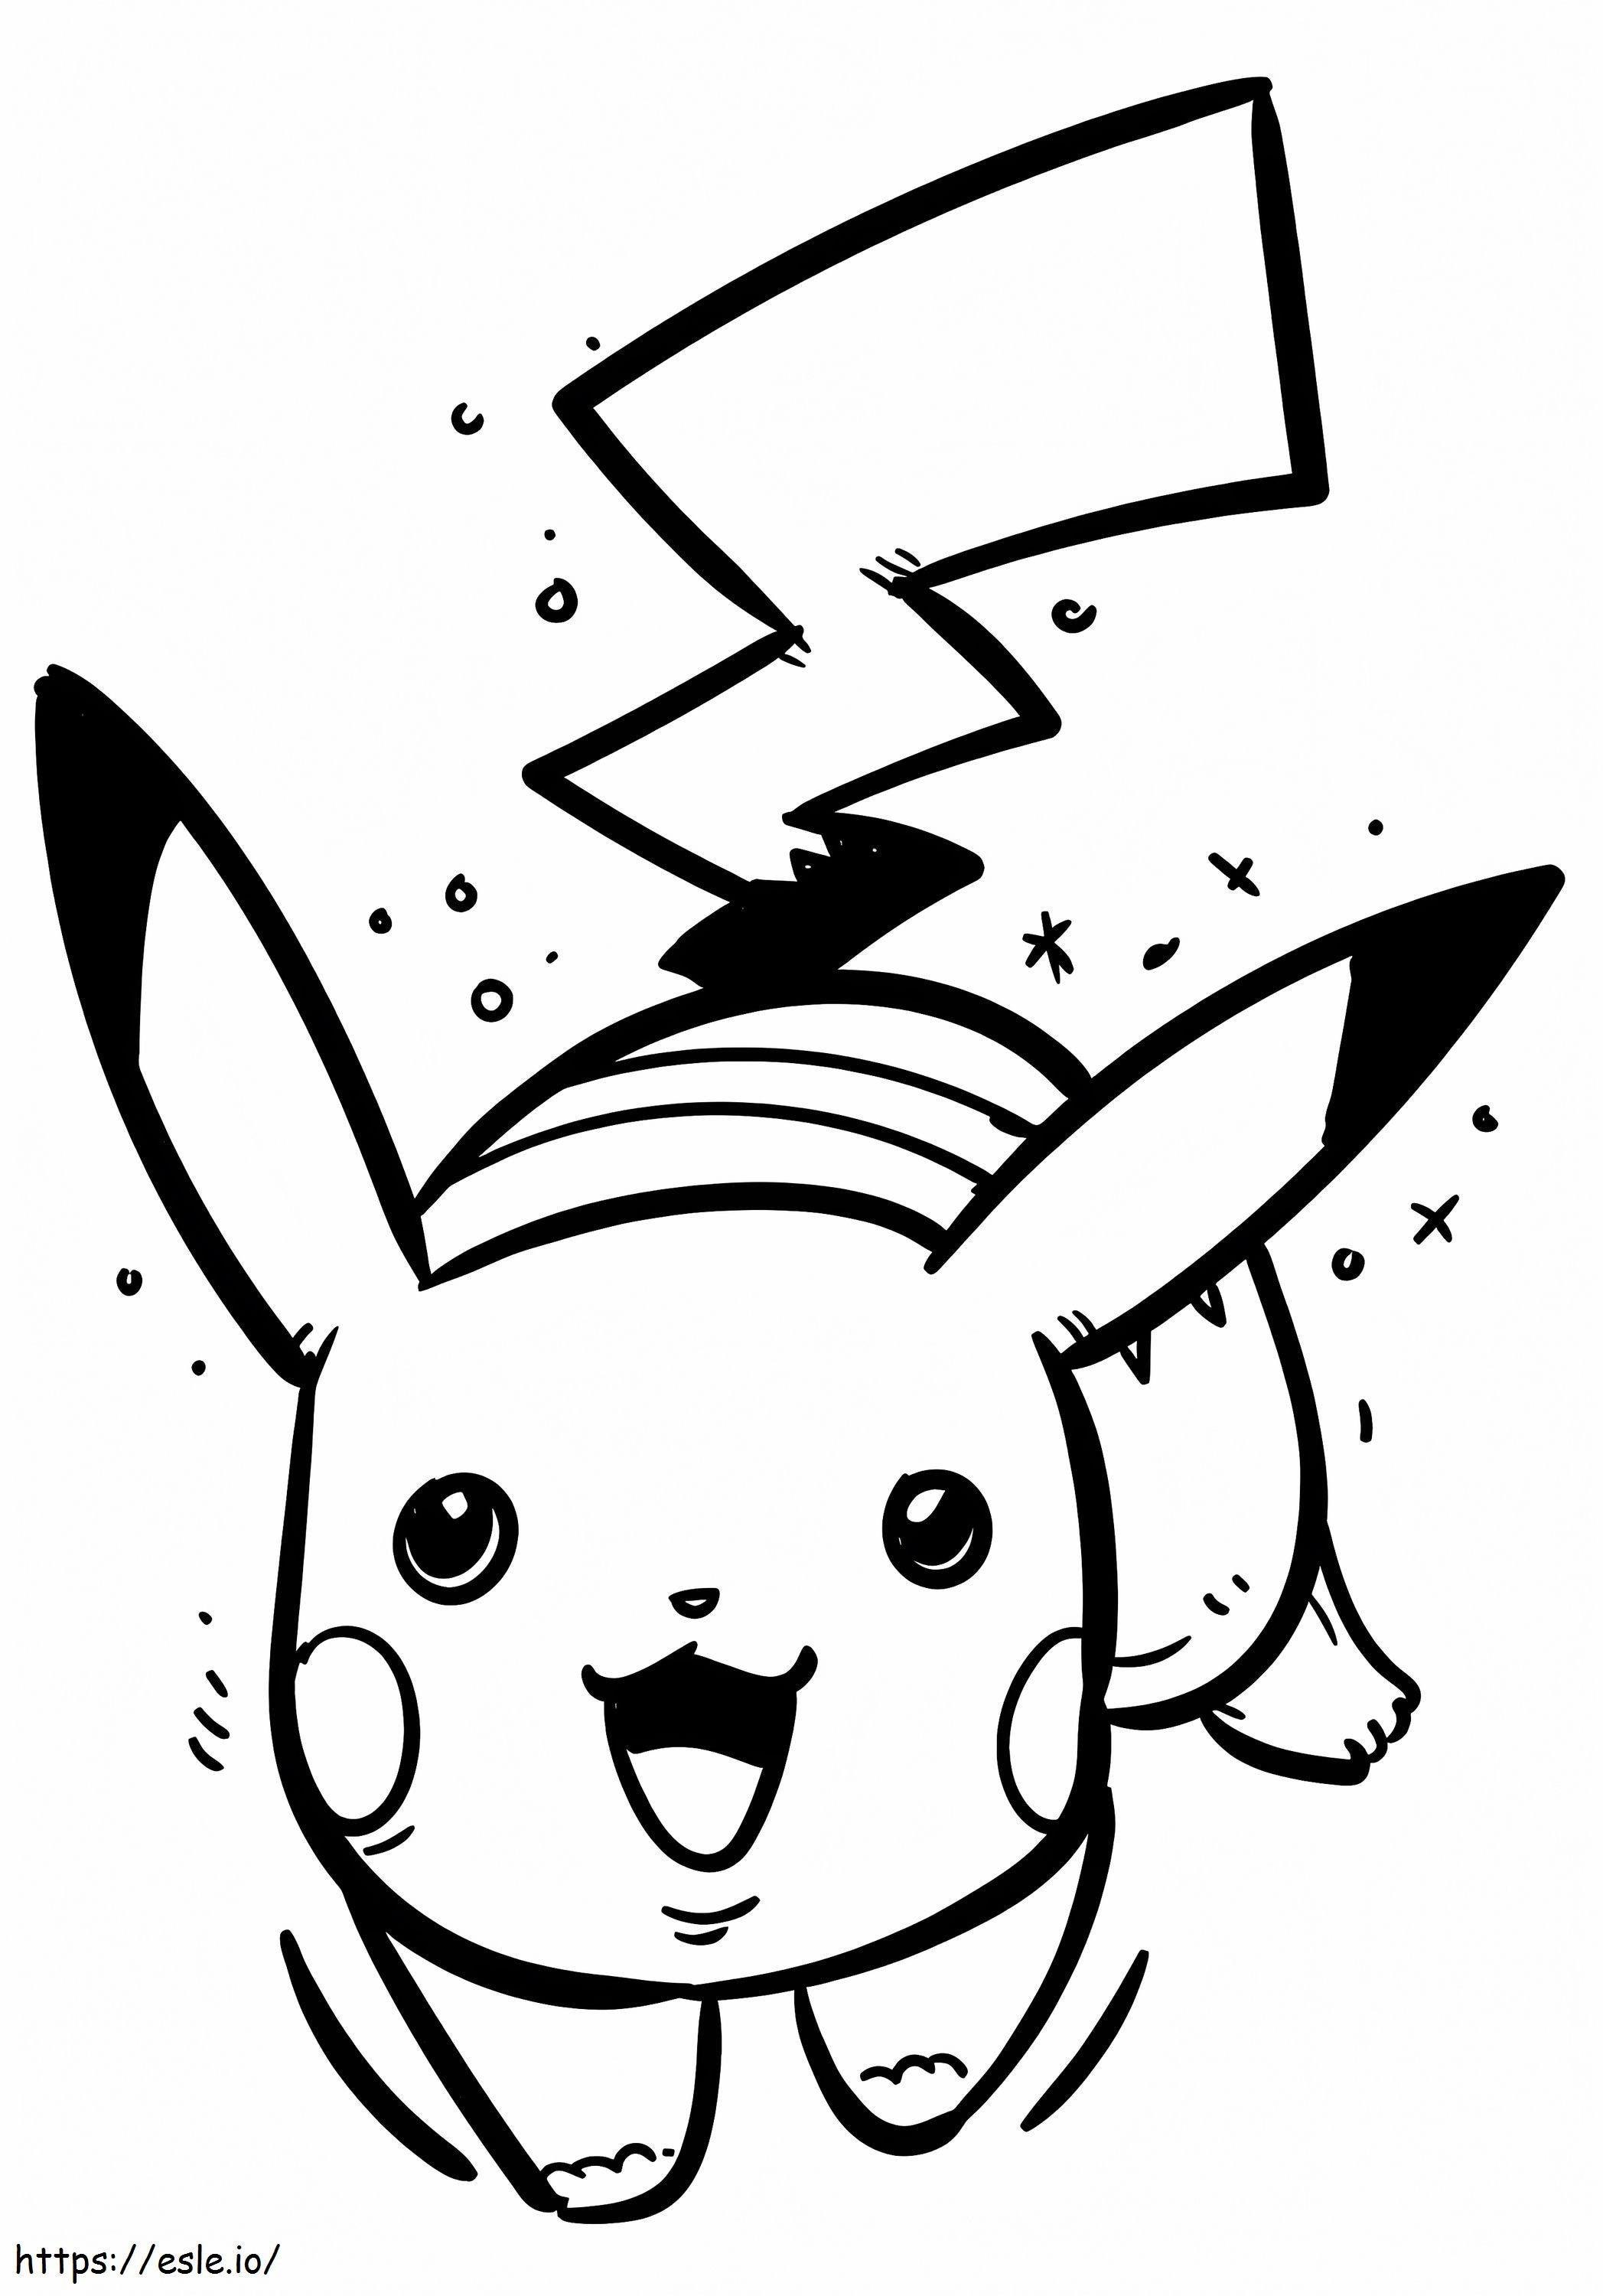 Pikachu fofo sorrindo para colorir